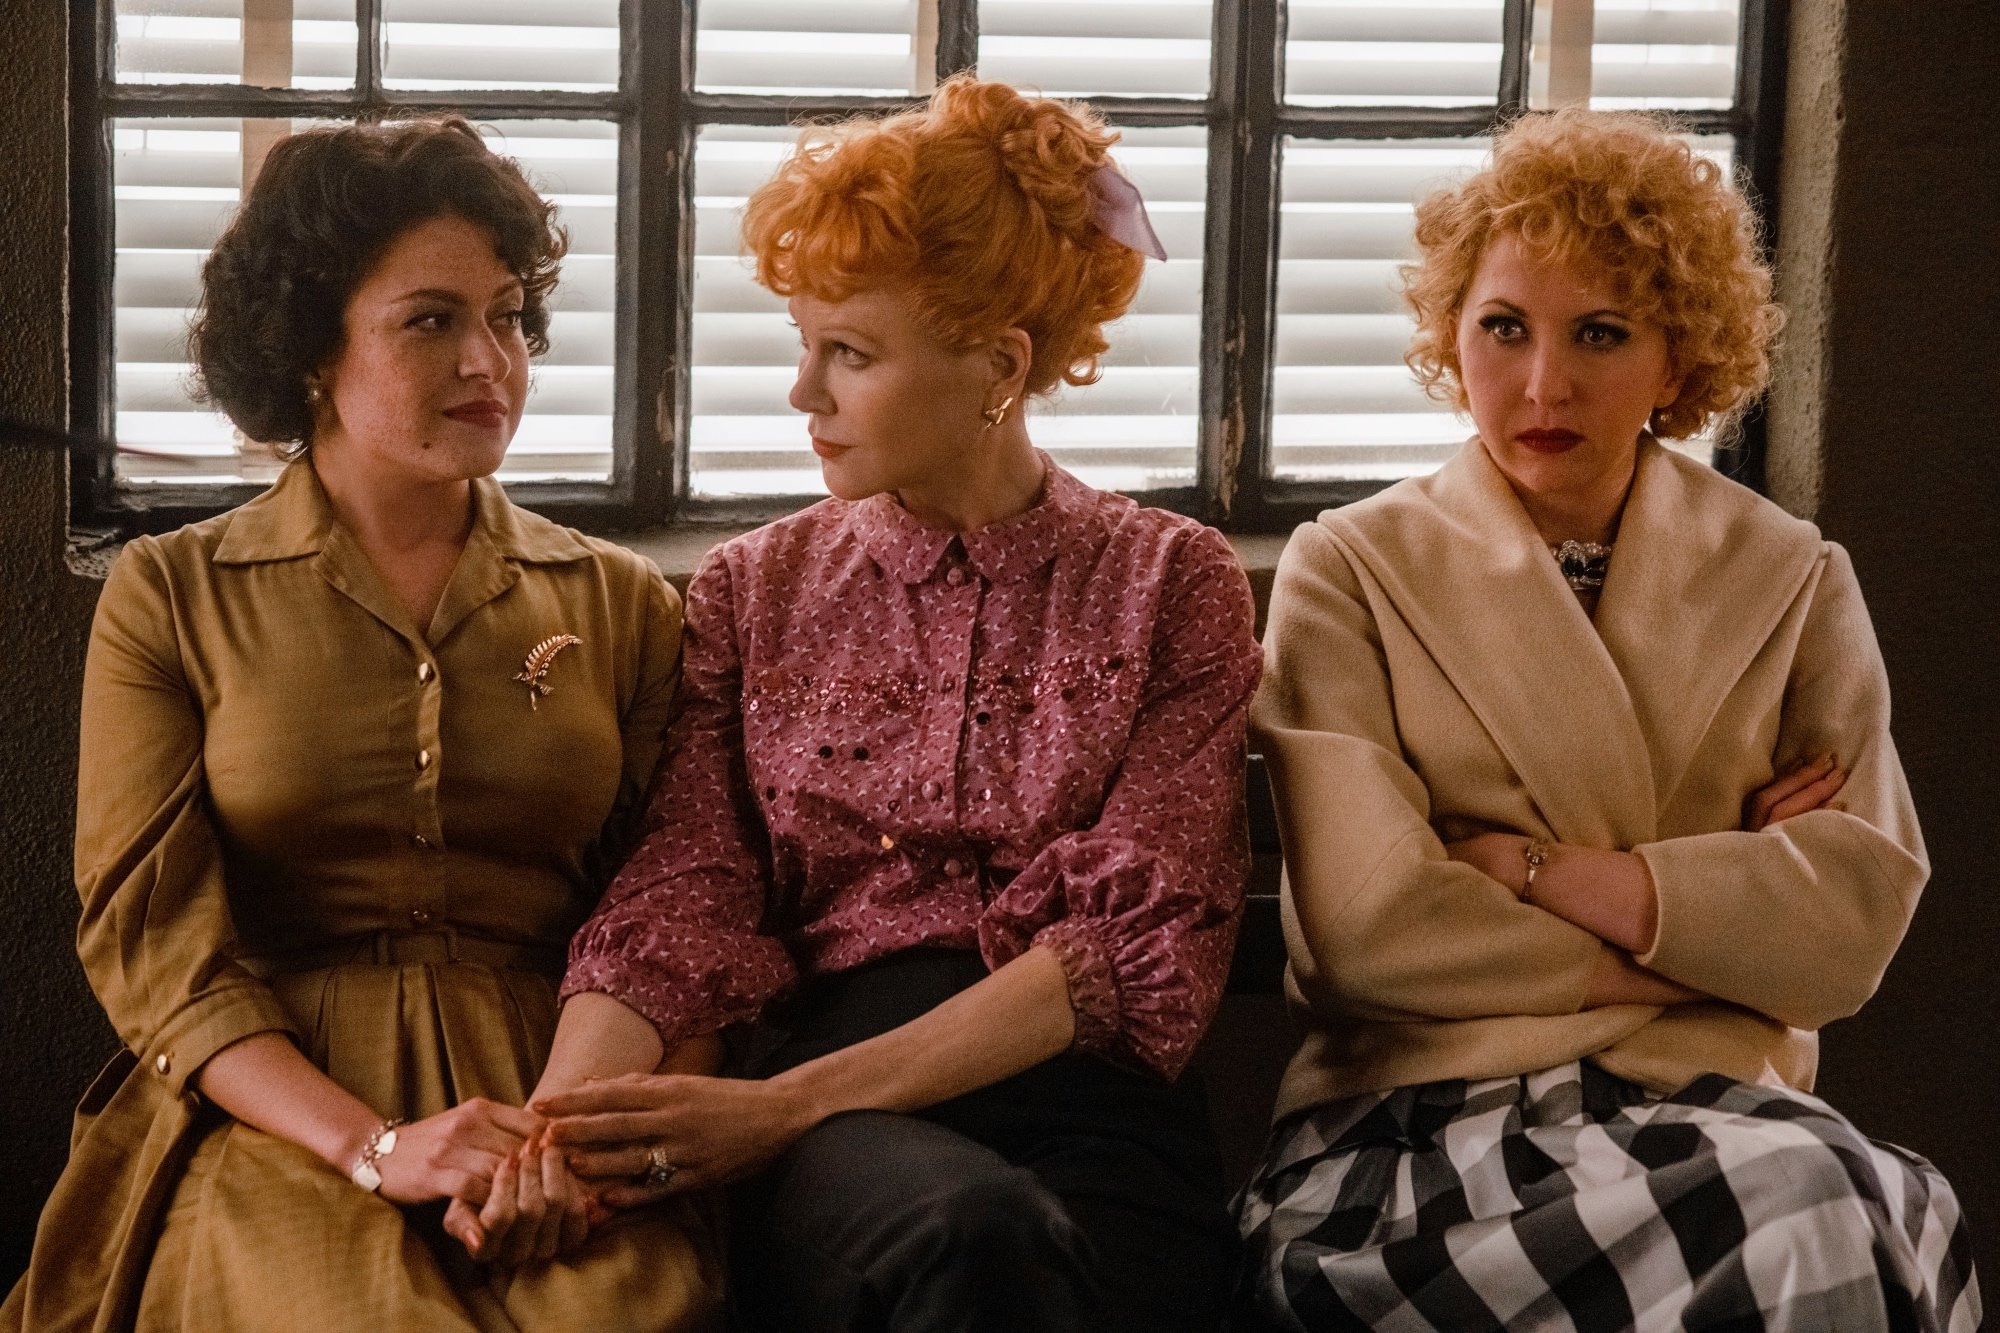 'Being the Ricardos' review Alia Shawkat as Madelyn Pugh, Nicole Kidman as Lucille Ball, and Nina Arianda as Vivian Vance sitting on a bench